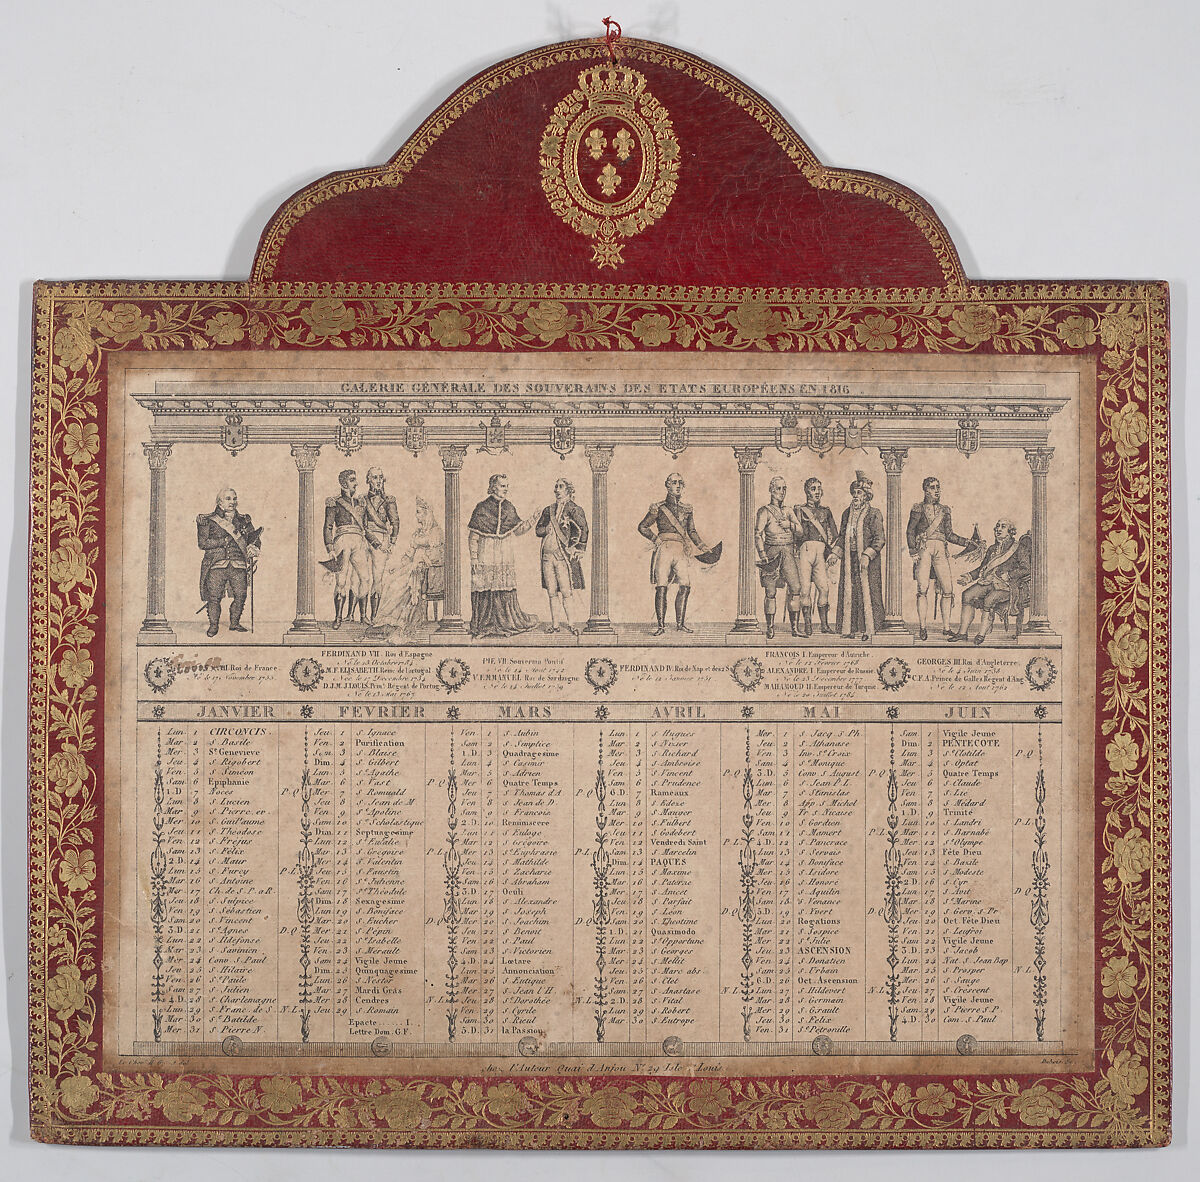 French Calendar for the Year 1816 (Galerie Generale des Souverains des Etats Européens), Chevalier Henry Guillot (French, active Paris, early 19th century), Engraving 